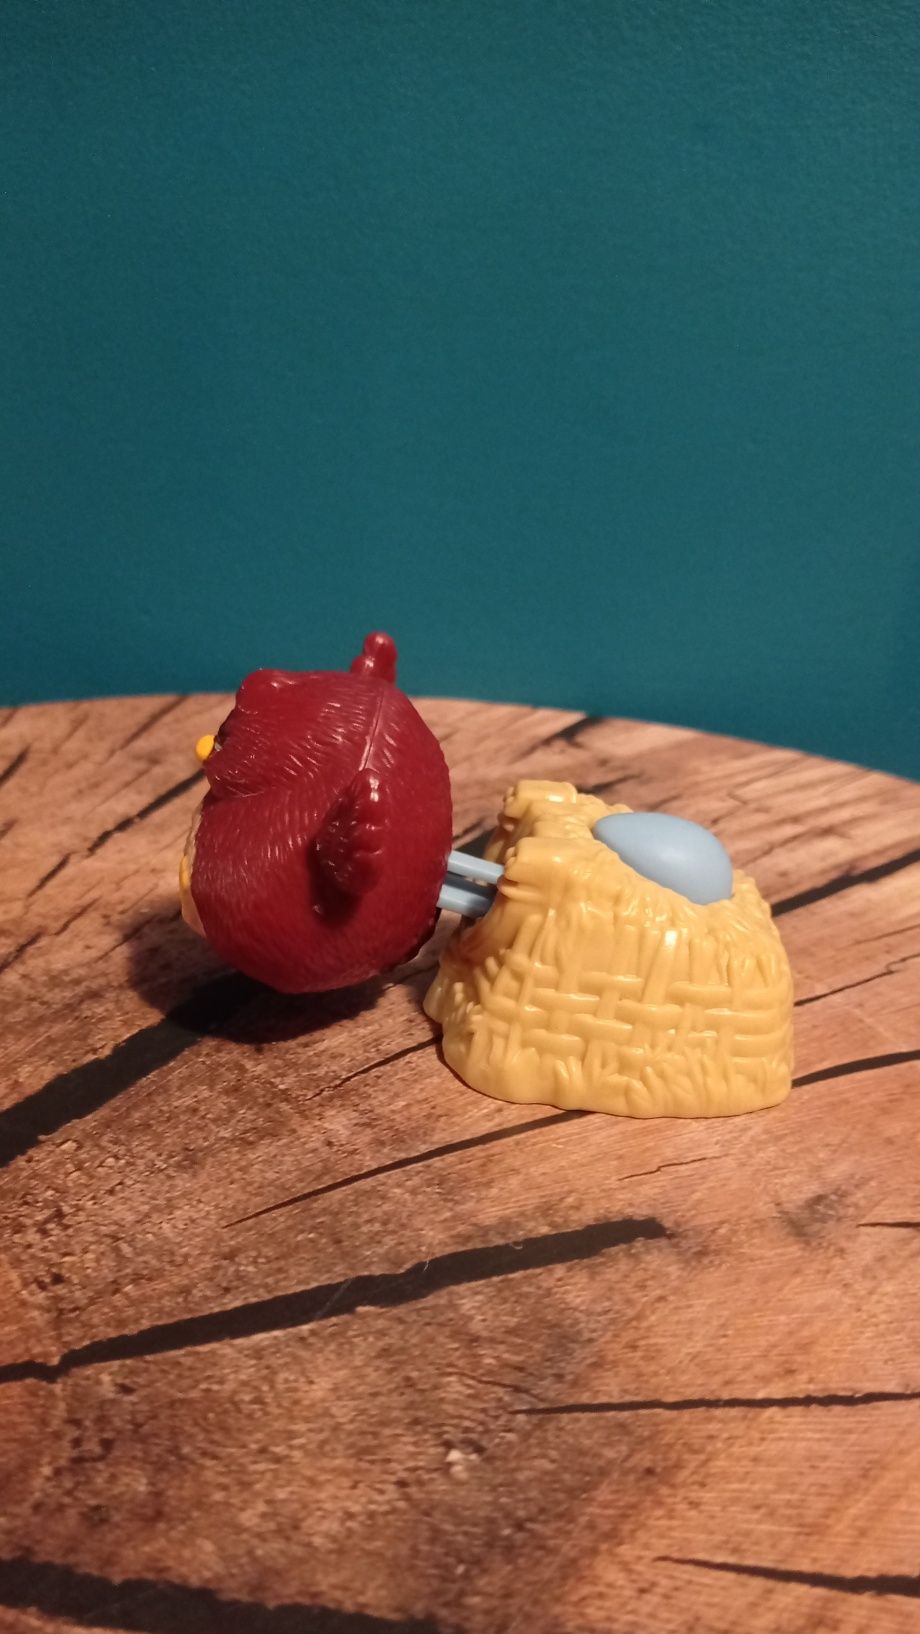 McDonald's Angry Birds ptaszek z katapultą zabawka z 2016 r.